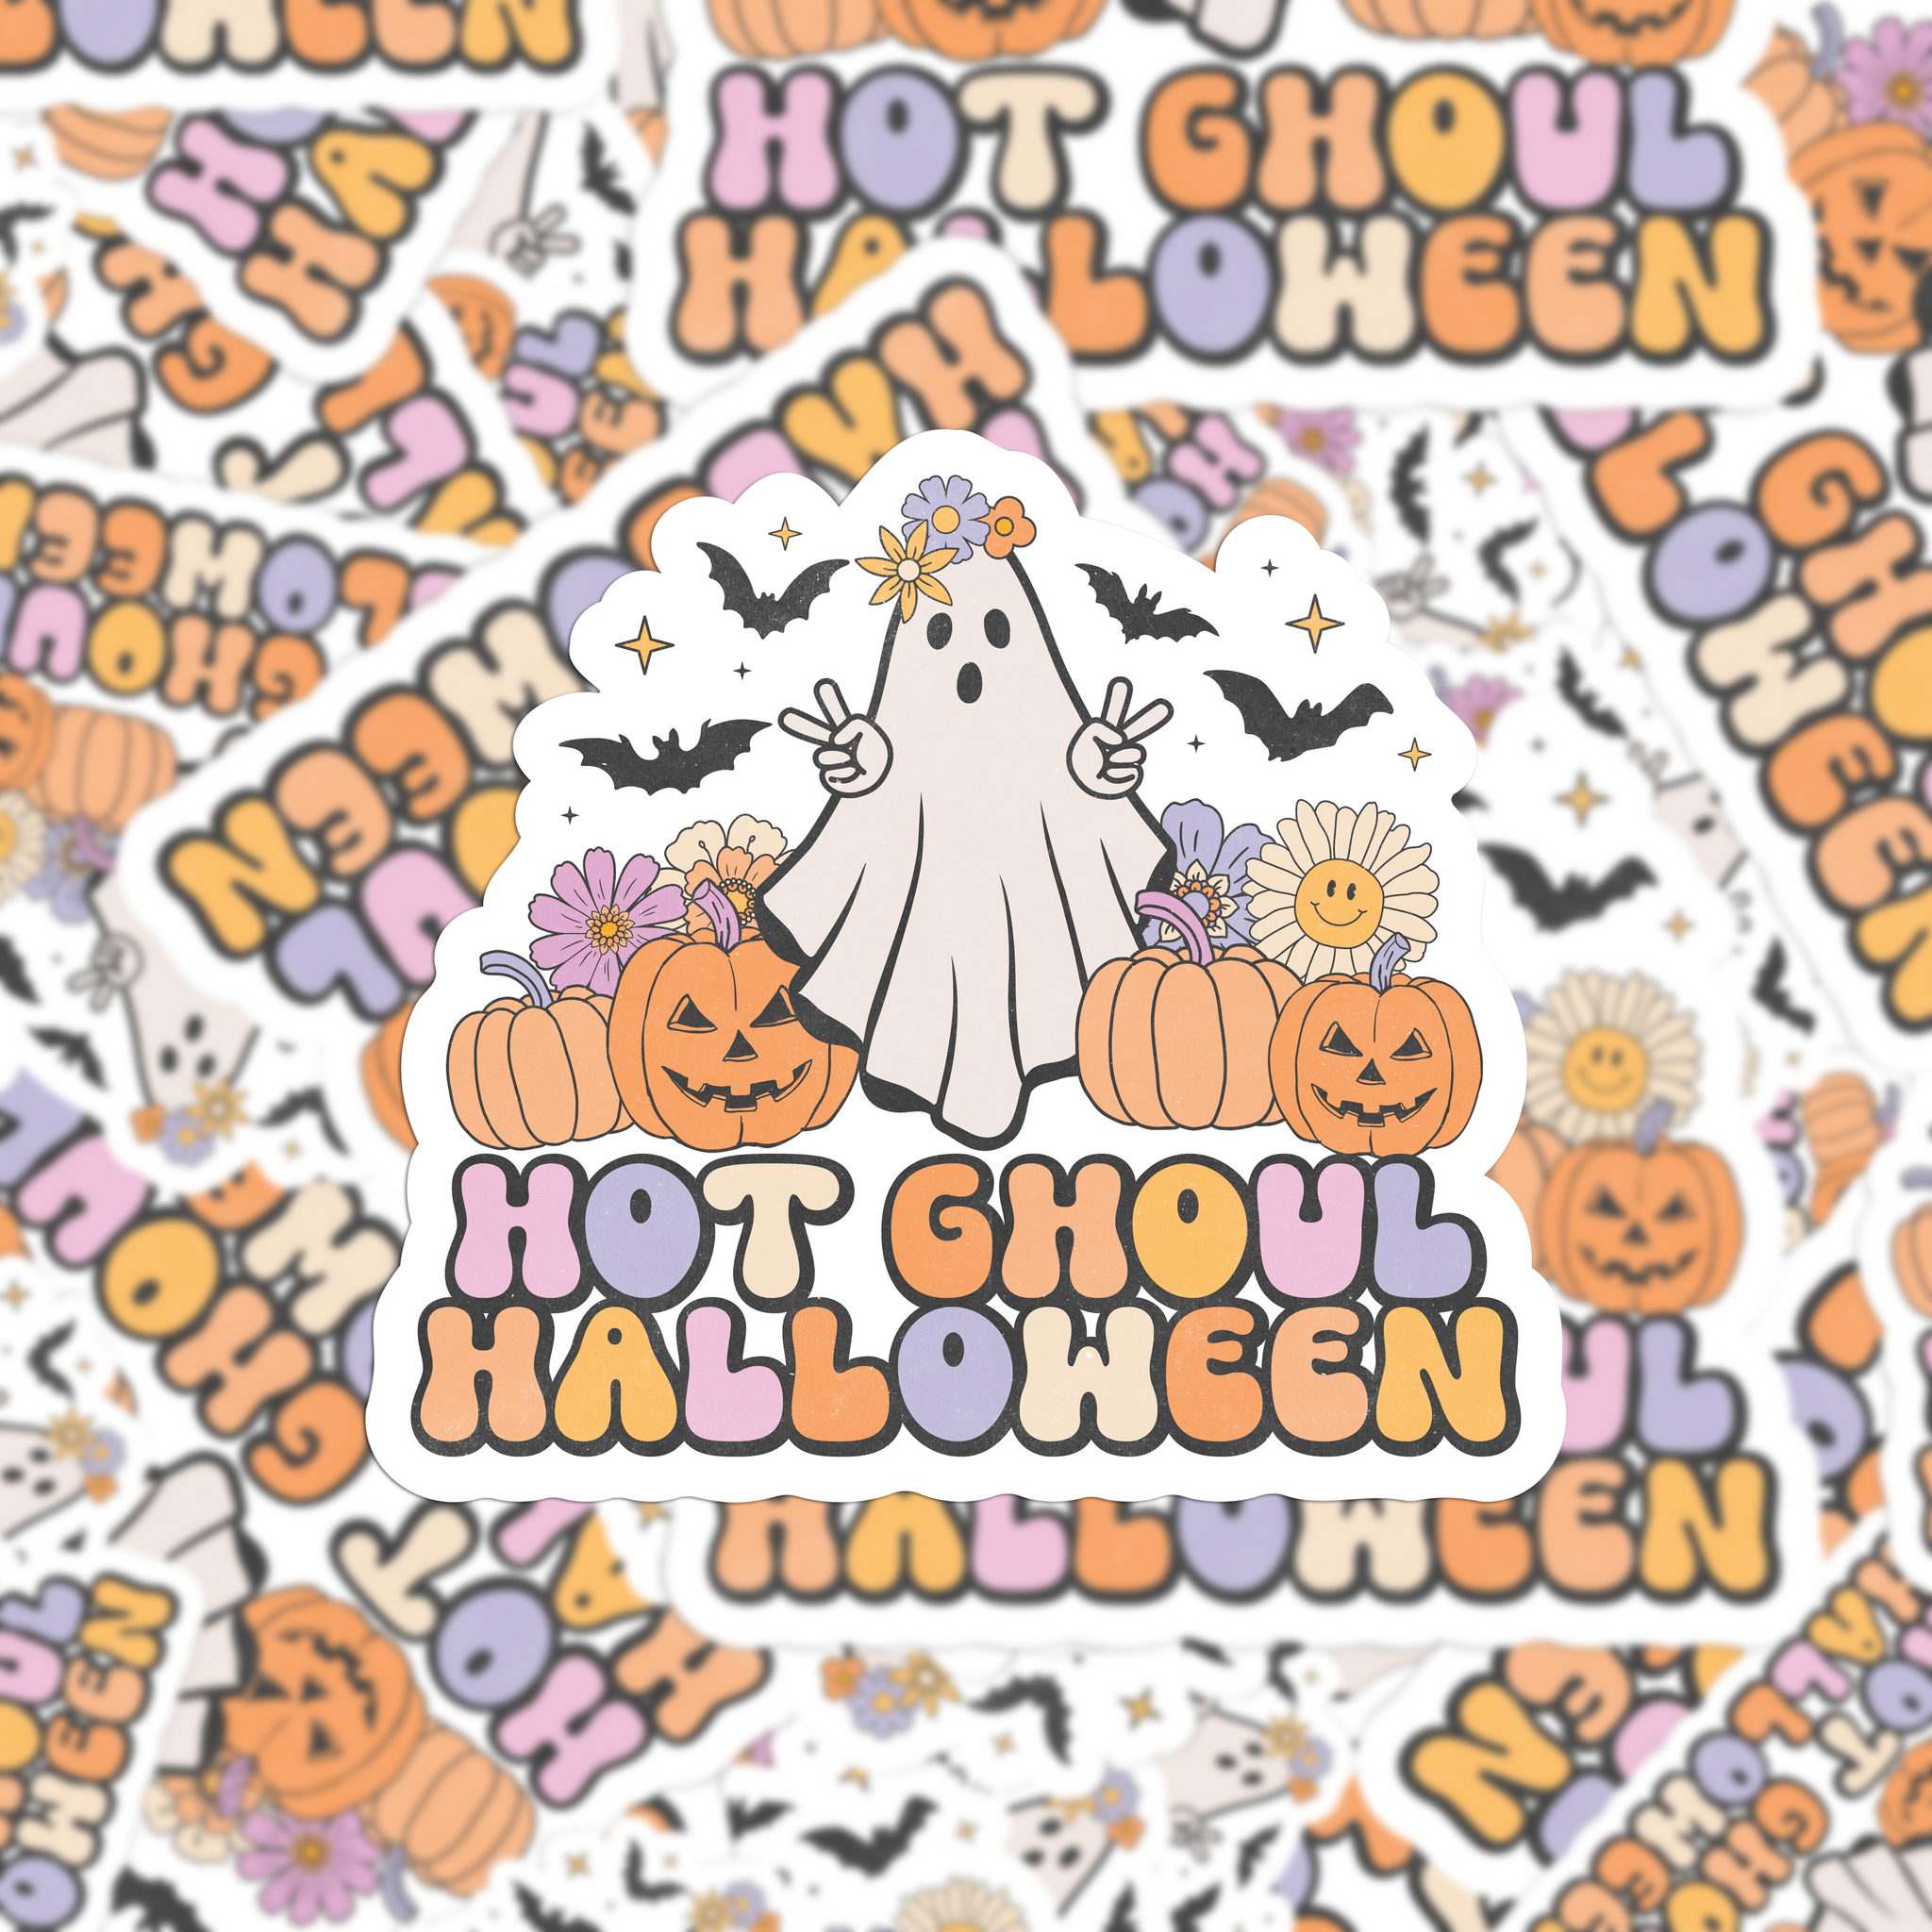 Hot Ghoul Halloween - Vinyl Waterproof Sticker